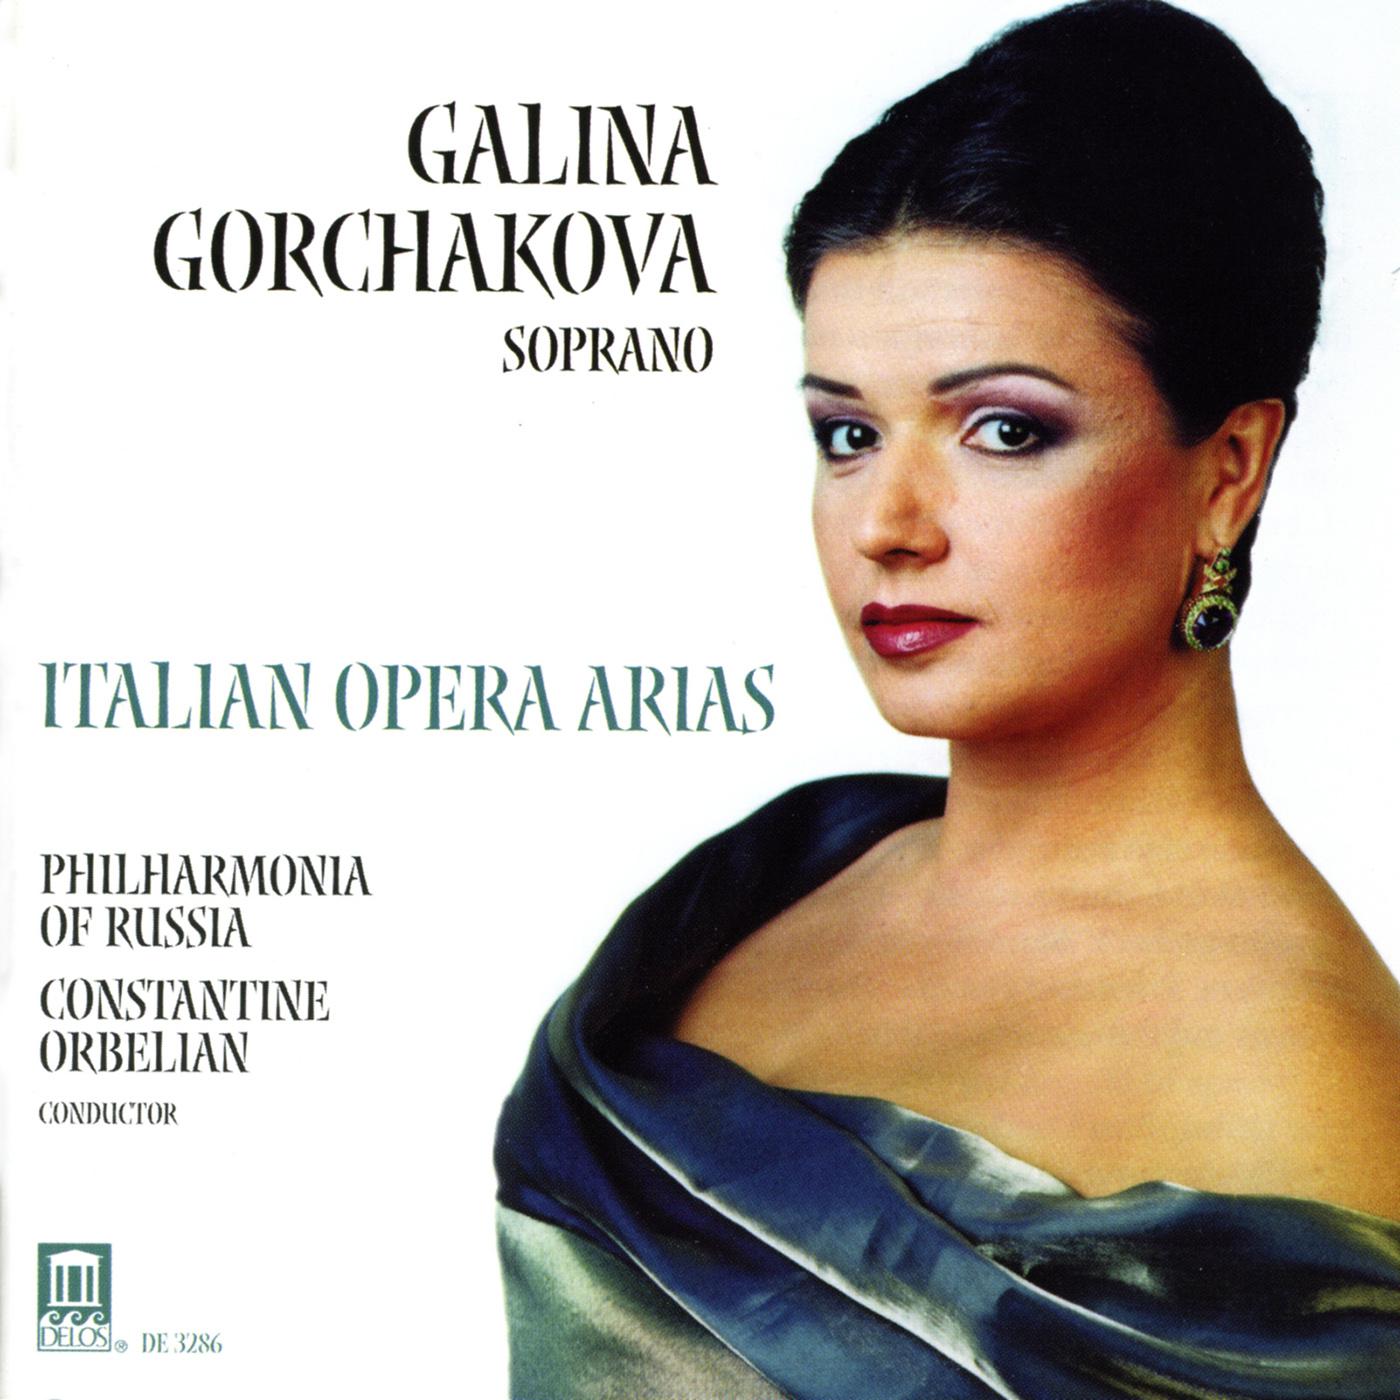 Galina Gorchakova - Madama Butterfly:Act II: Un bel di, vedremo